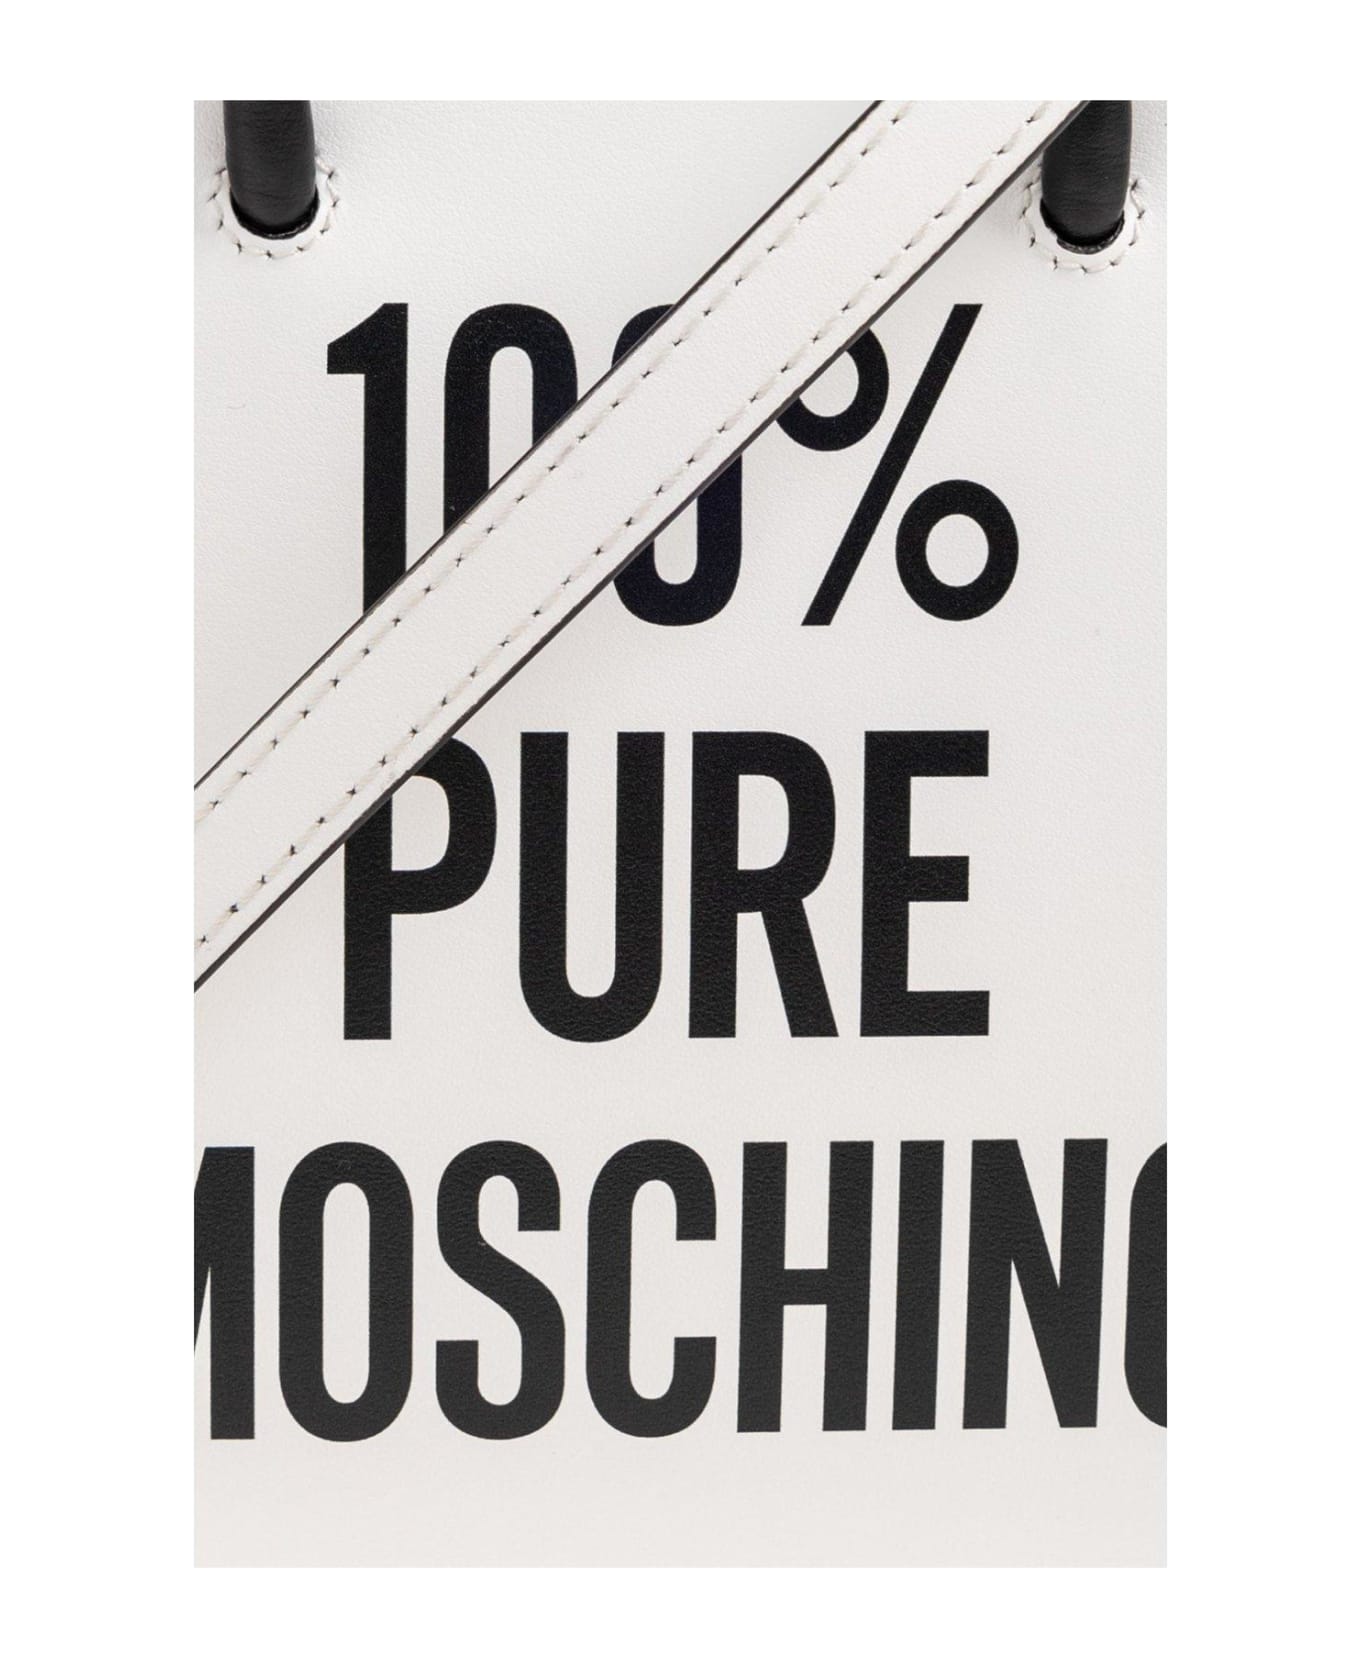 Moschino Slogan-printed Top Handle Bag - WHITE